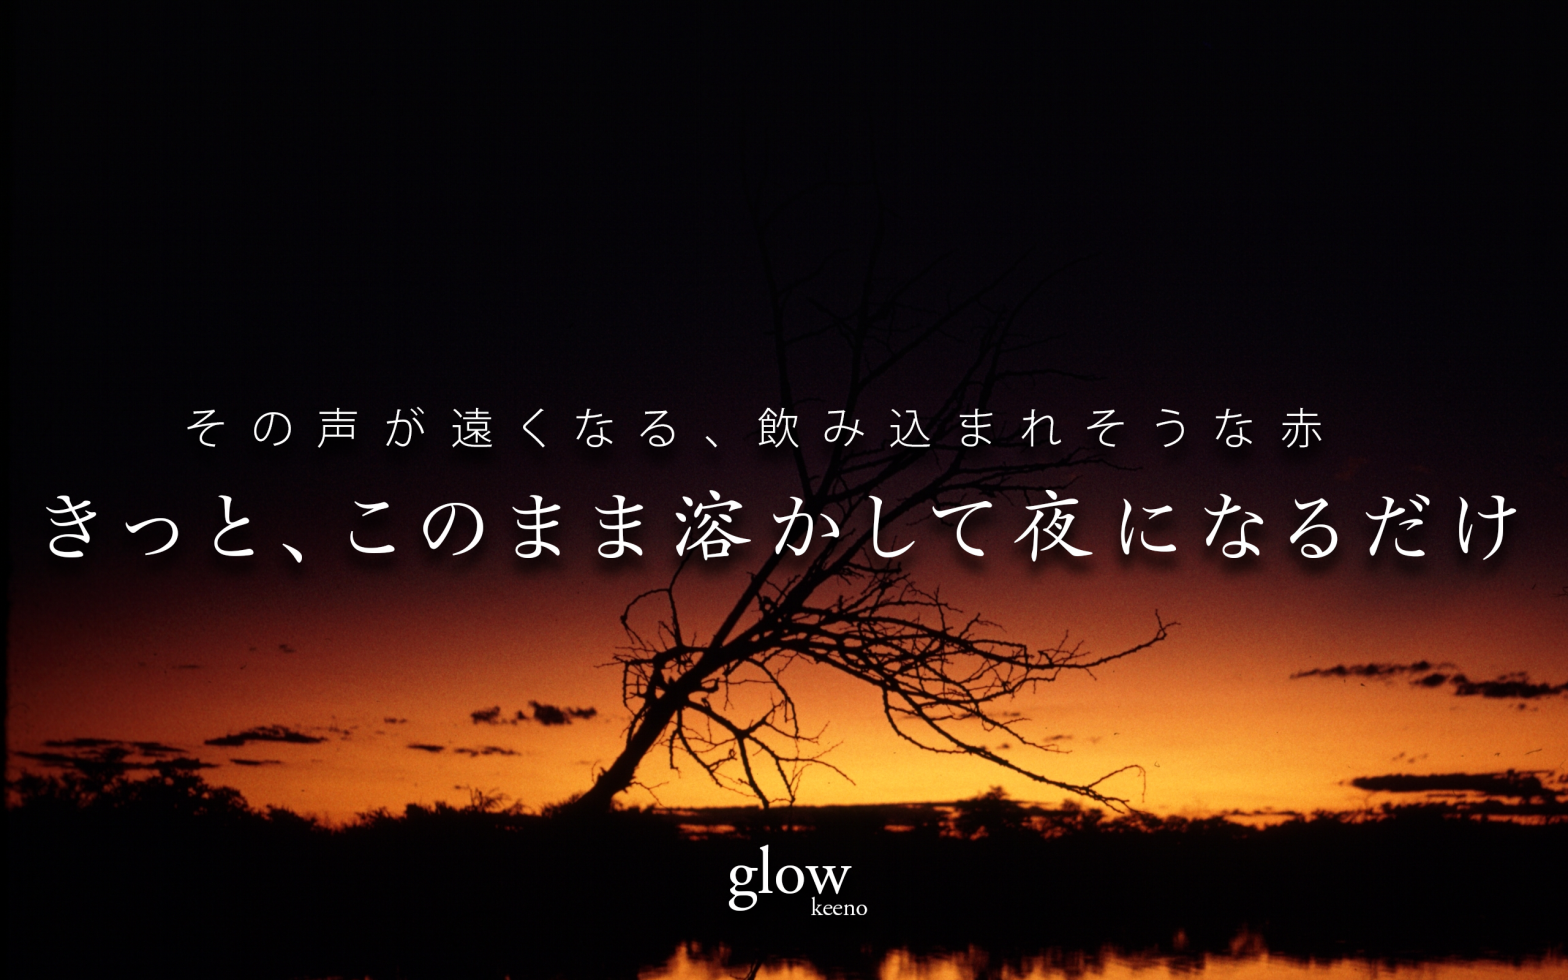 Glow (jp)